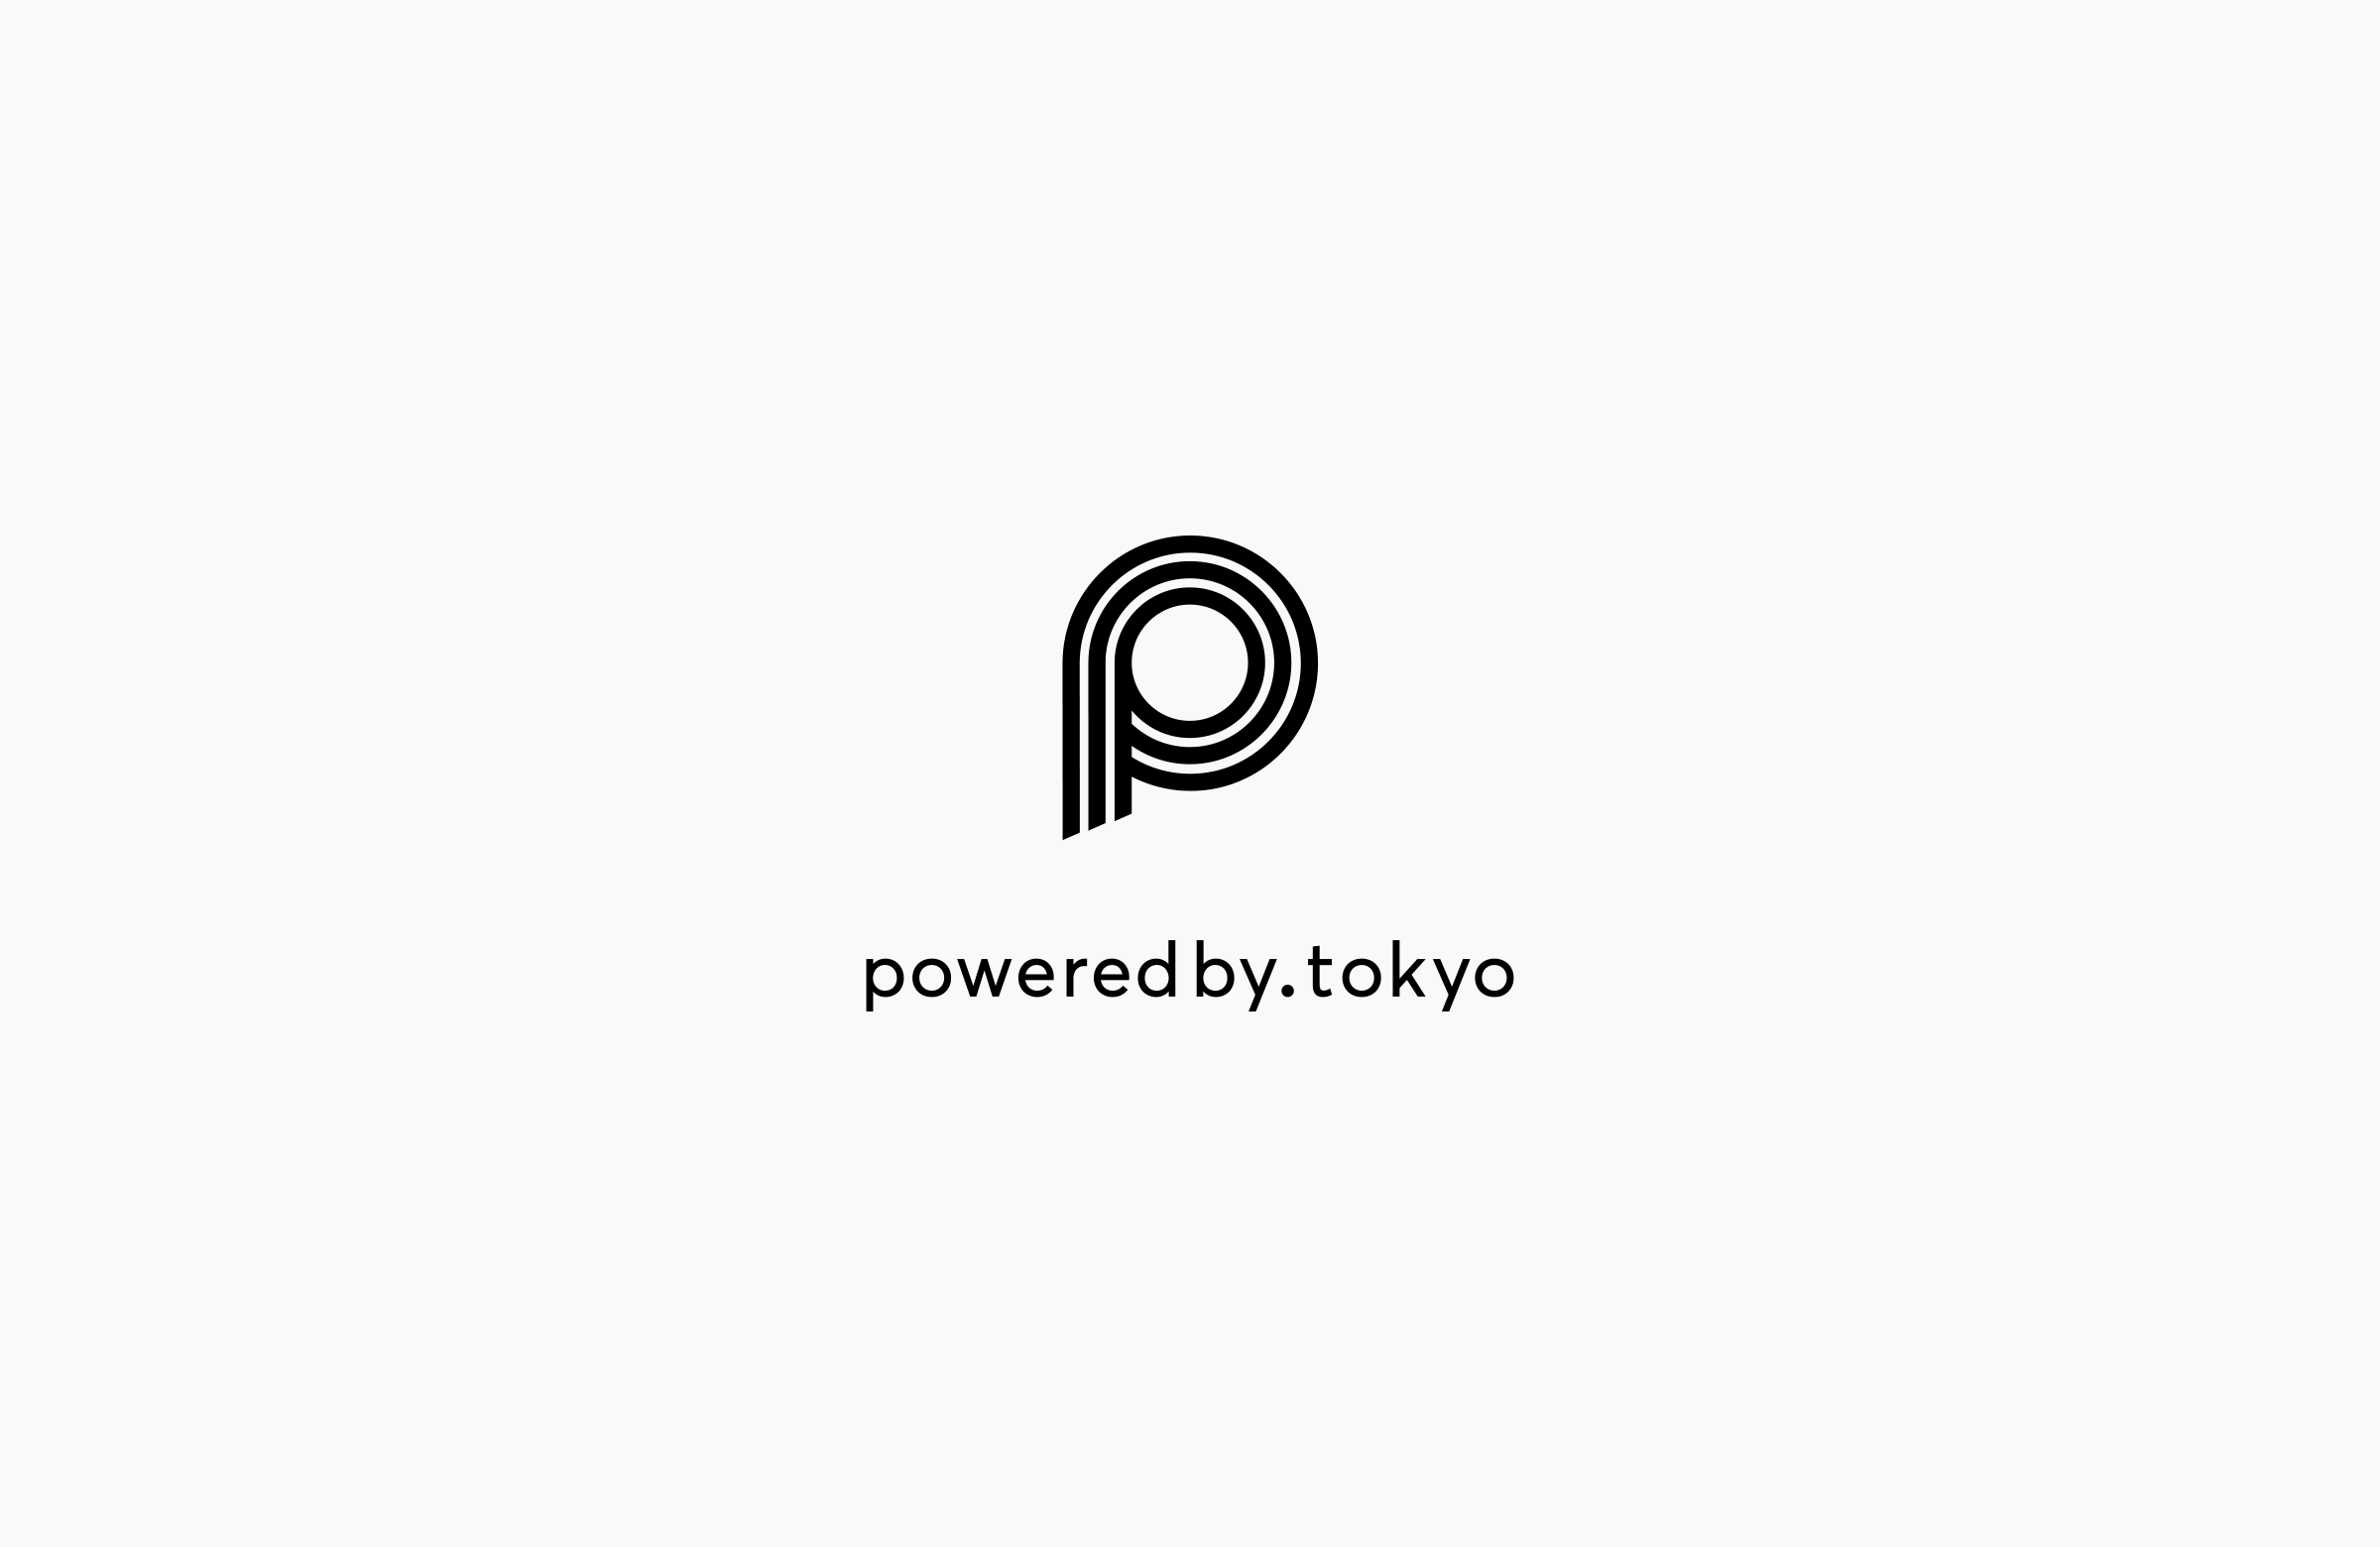 poweredby.tokyo